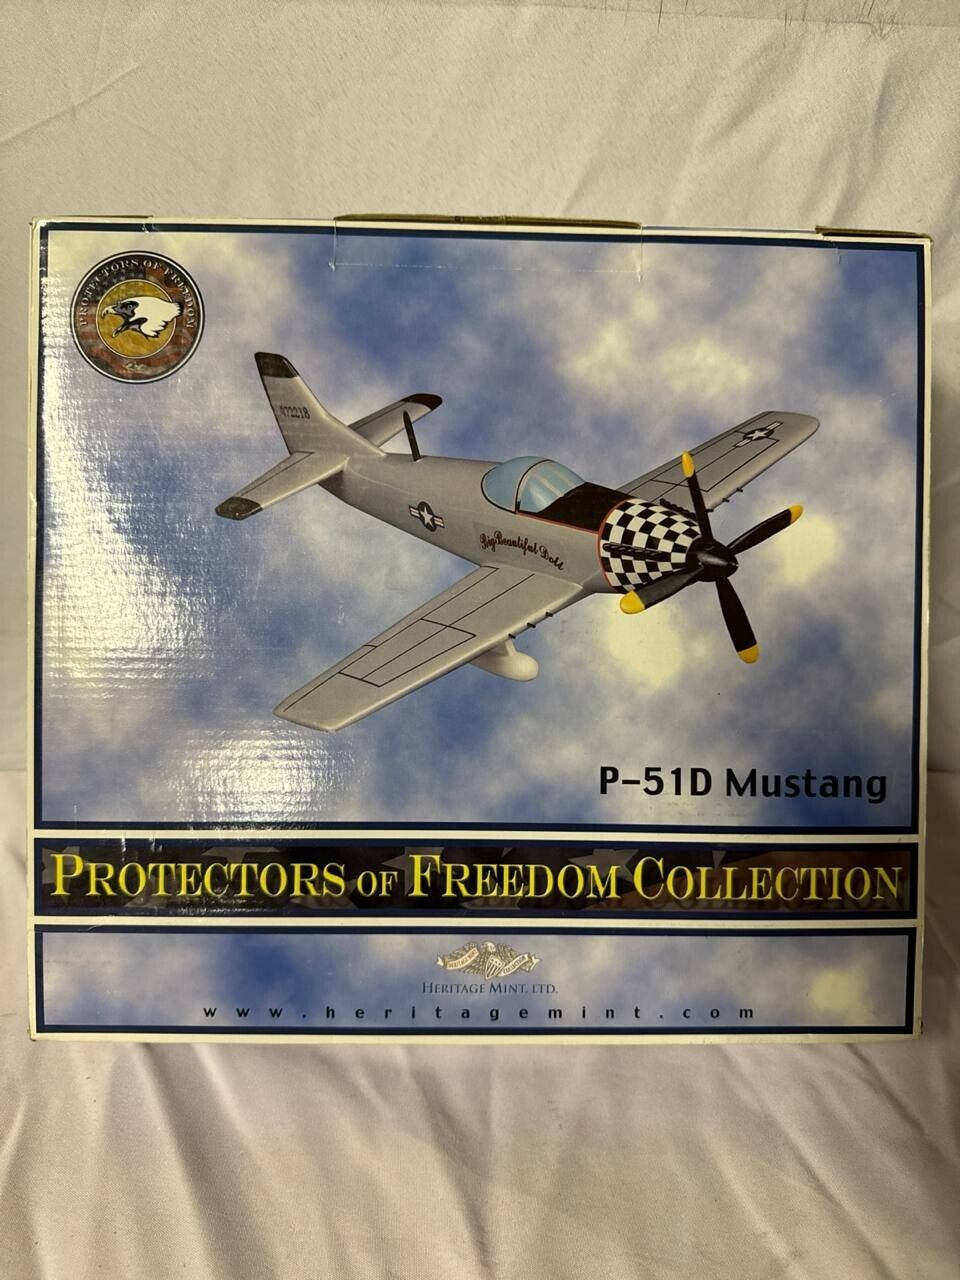 Heritage Mint Protectors Of Freedom Collectn P-51D Mustang Wood Model Plane NIB